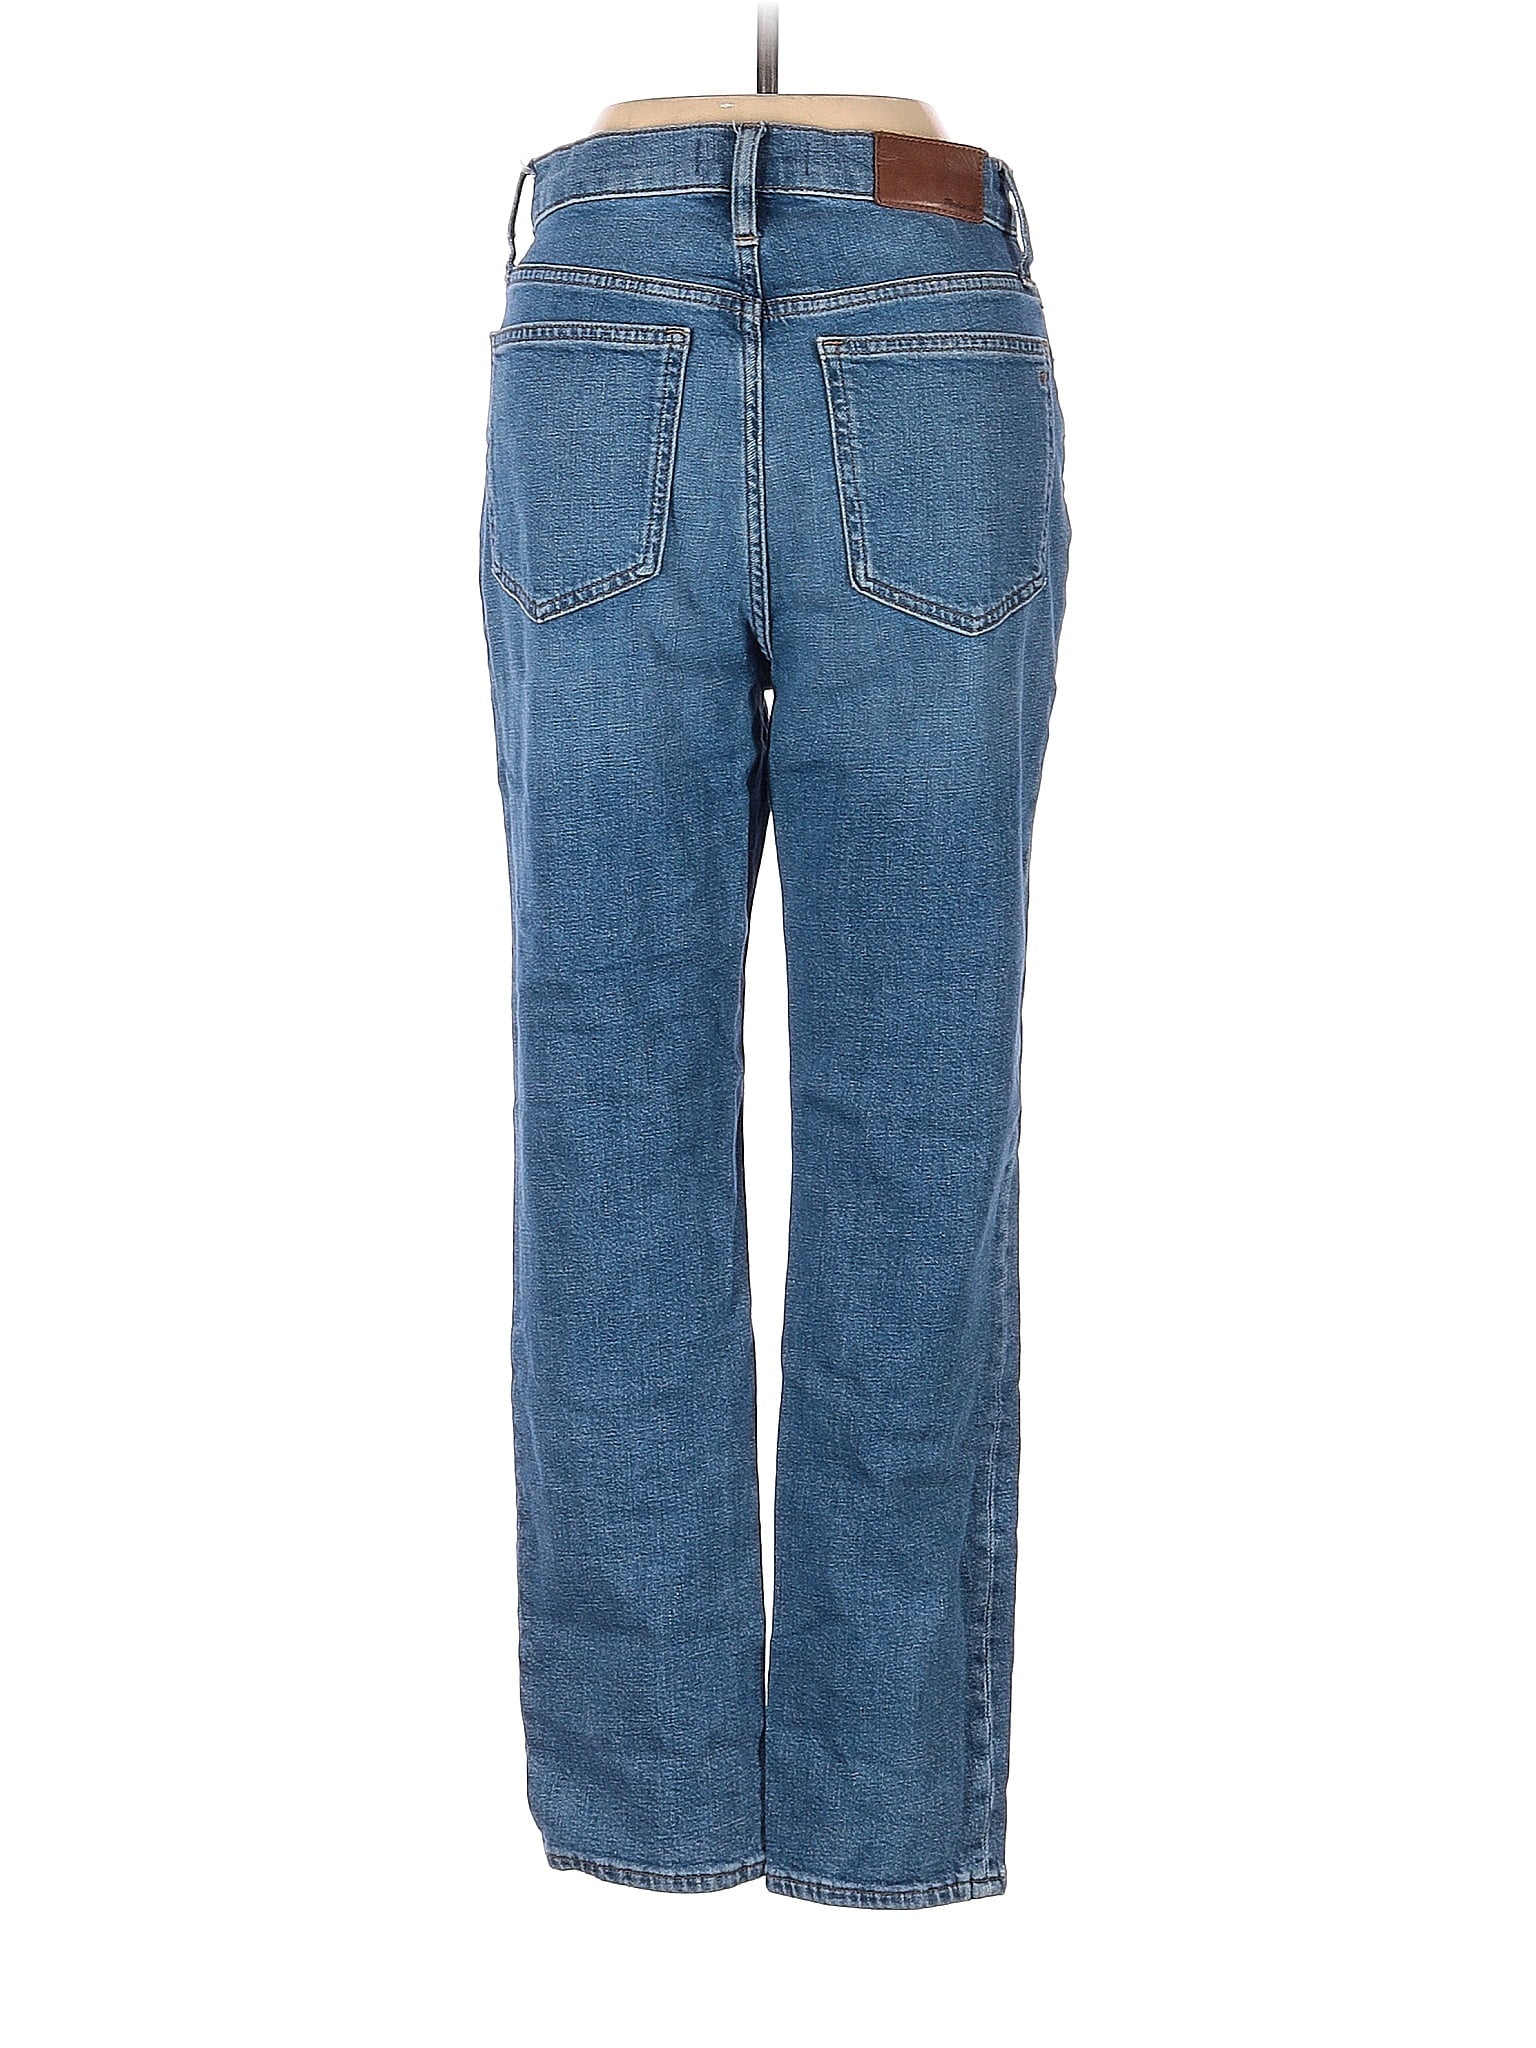 High-Rise Jeans waist size - 26